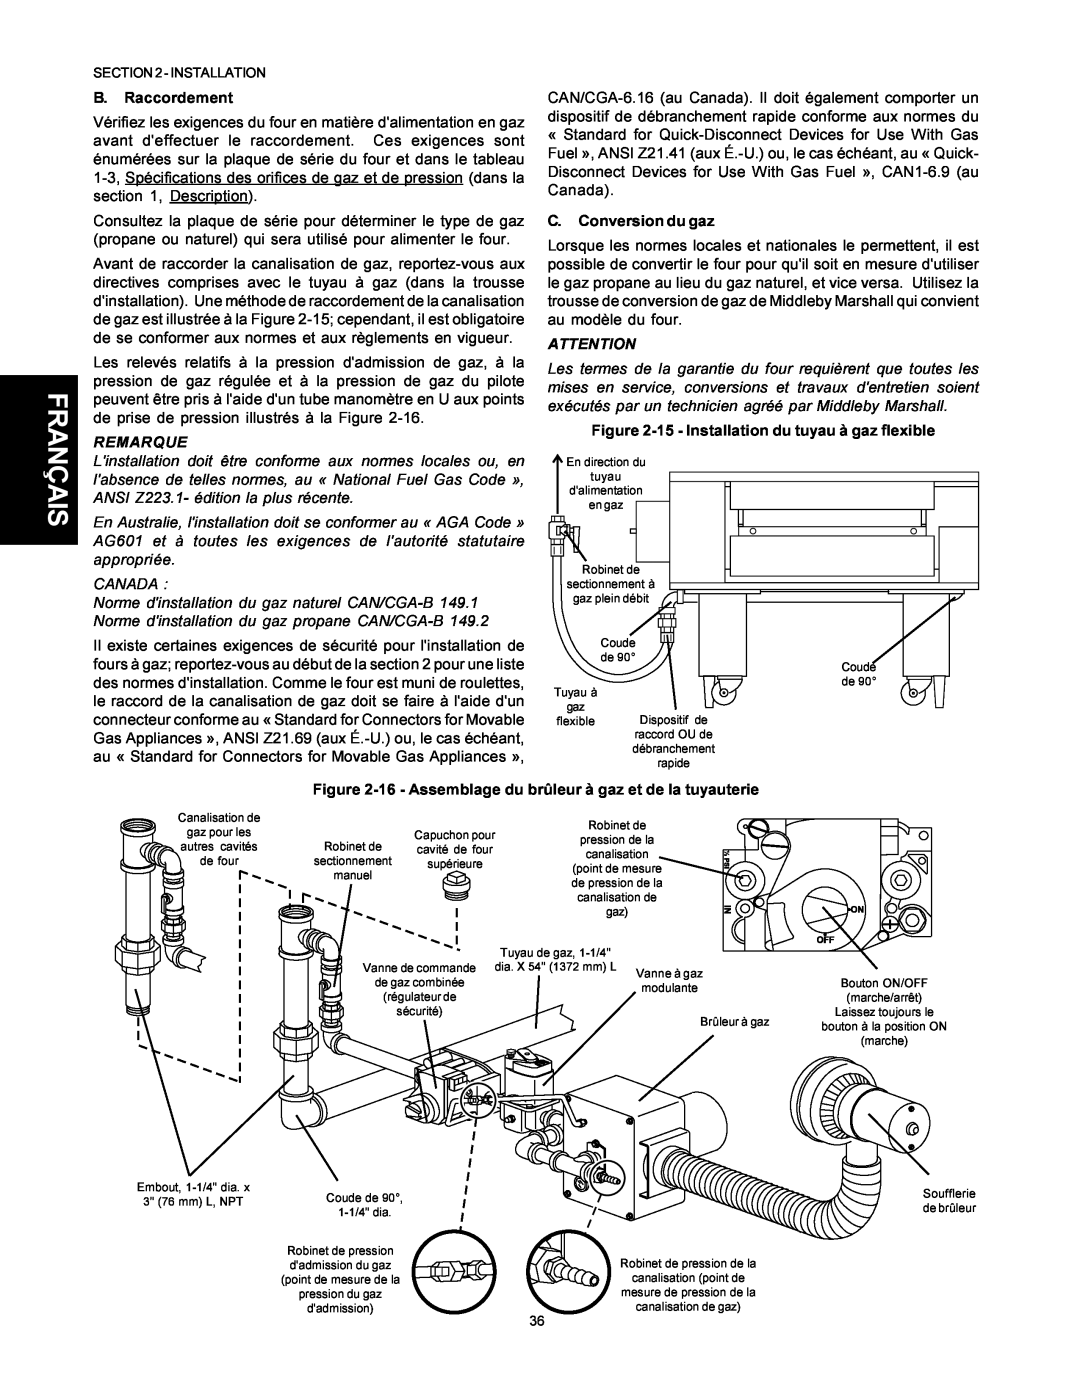 Middleby Marshall PS500 installation manual Français, B. Raccordement, Remarque, C. Conversion du gaz 